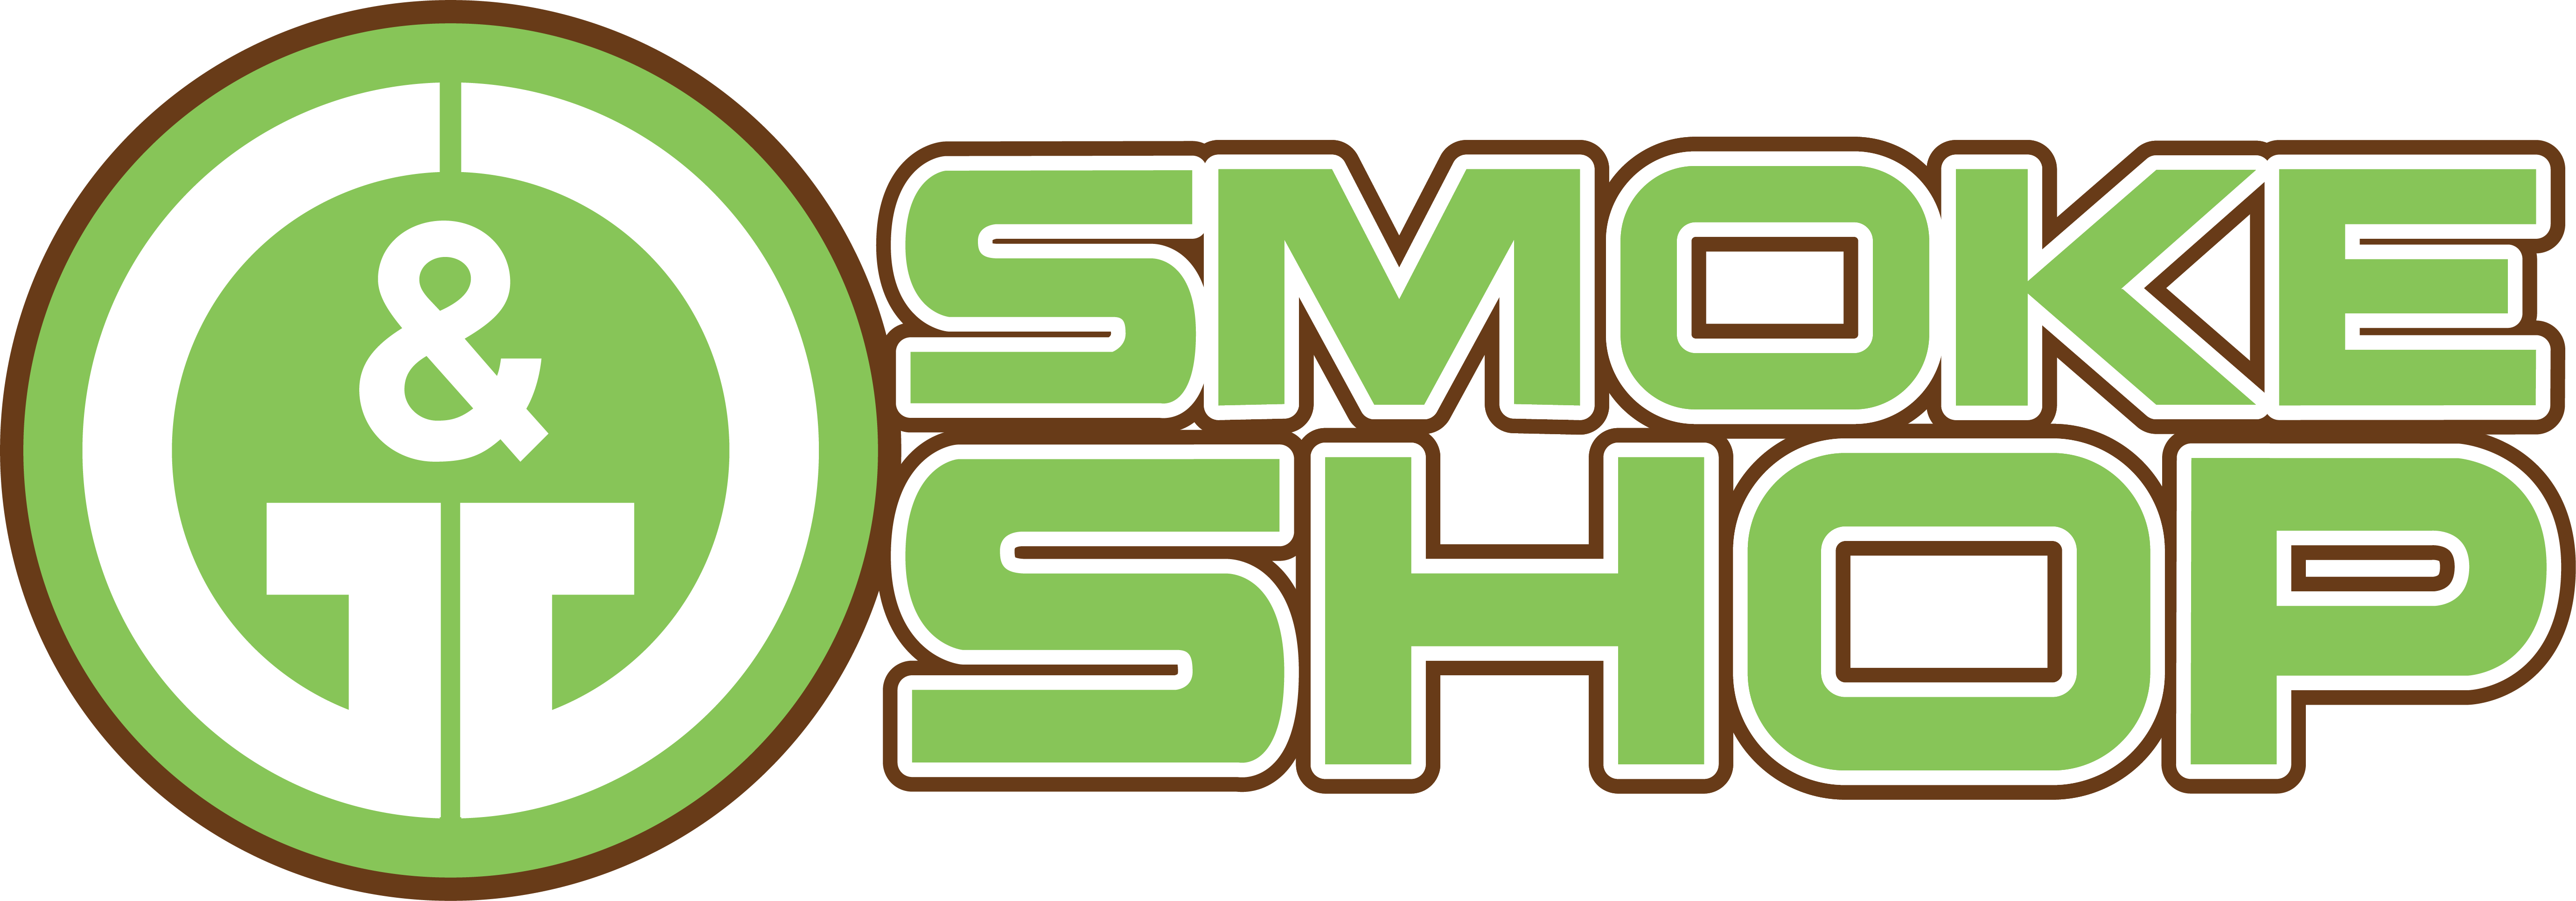 G & G Smoke & Vape Shop | Kratom, Delta 8, CBD & More! | The best smokeshop in the known universe!